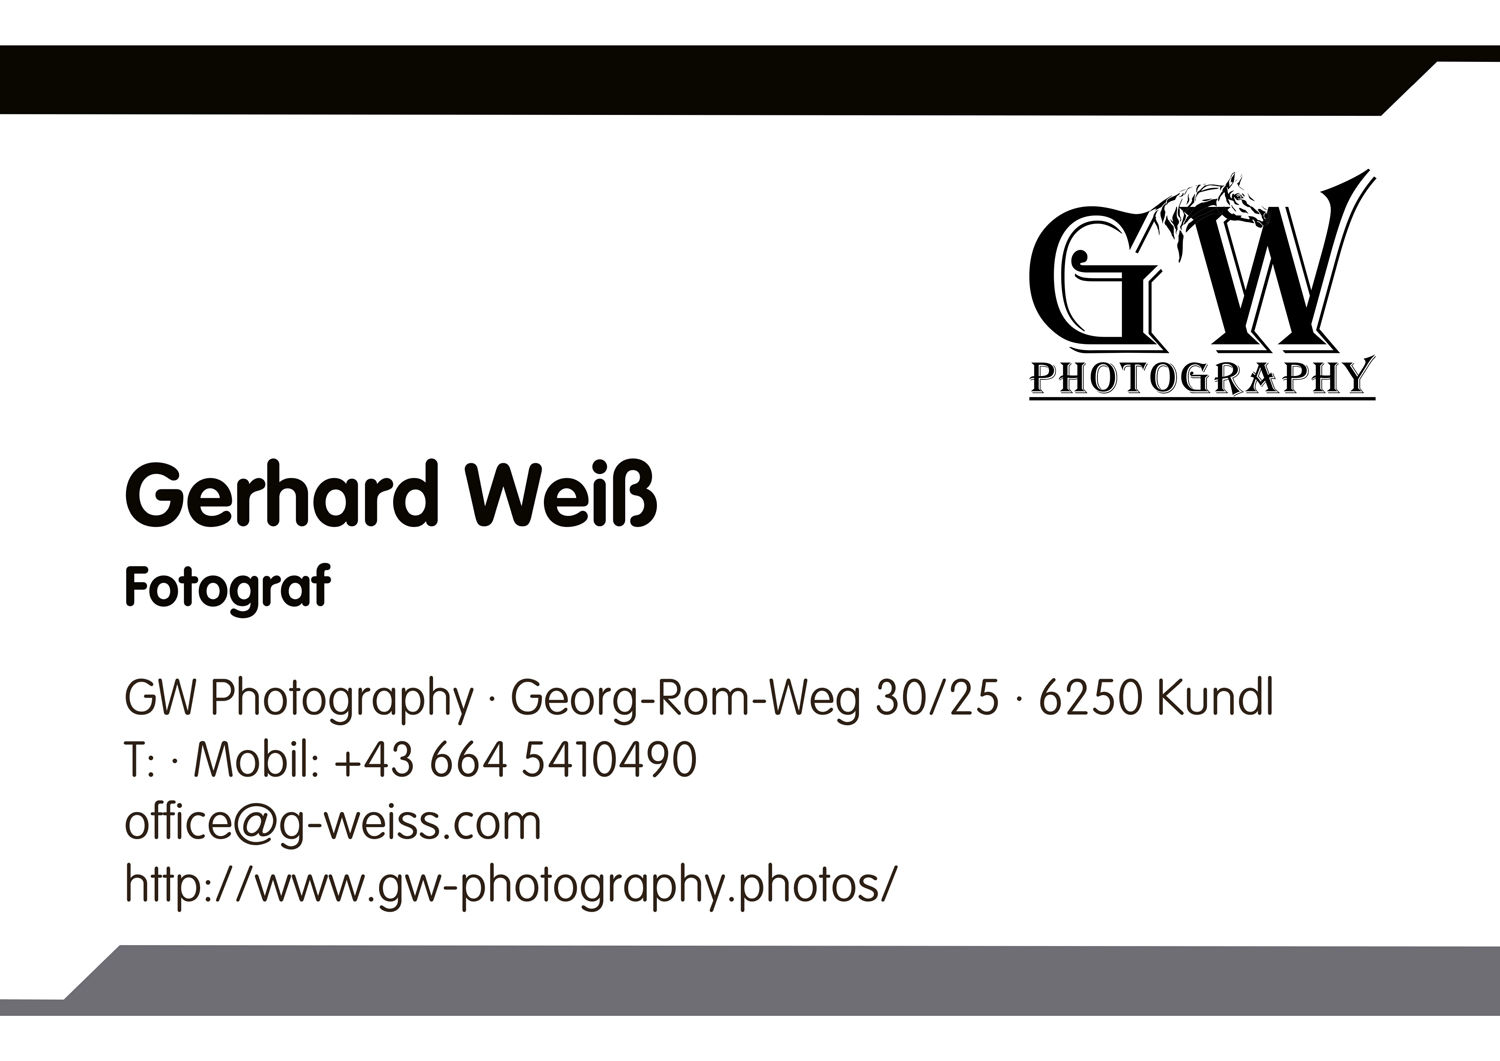 GWPhotography Studio Visitenkarten 1